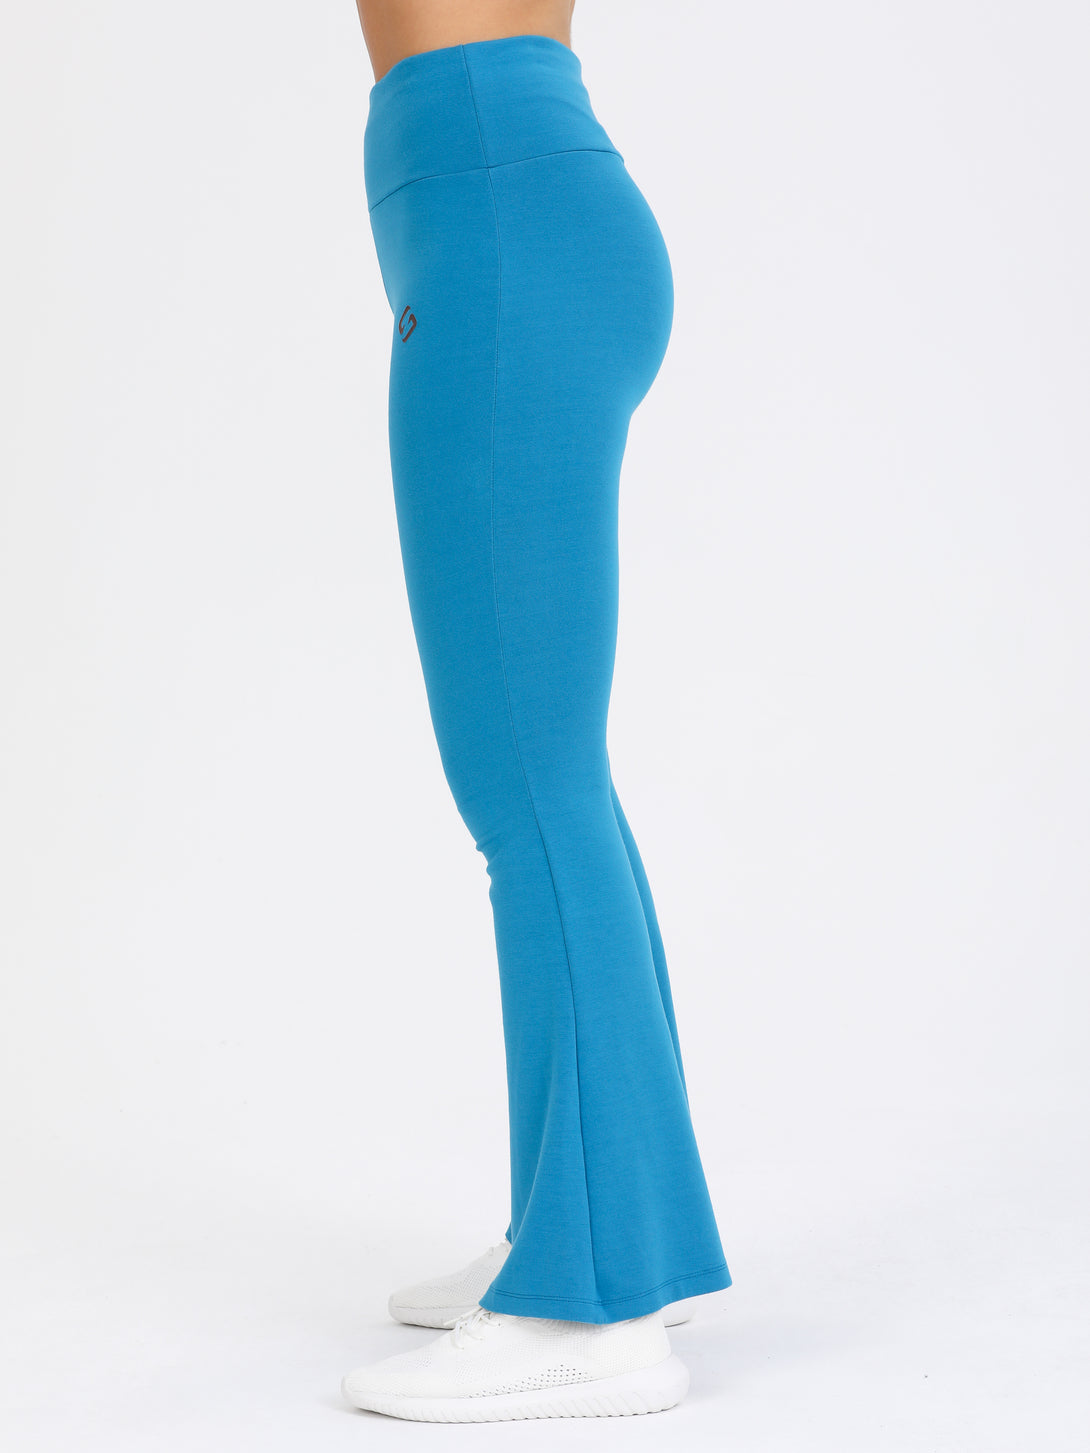 A Woman Wearing Saxony Blue Color Legacy Jersey Yoga Pants